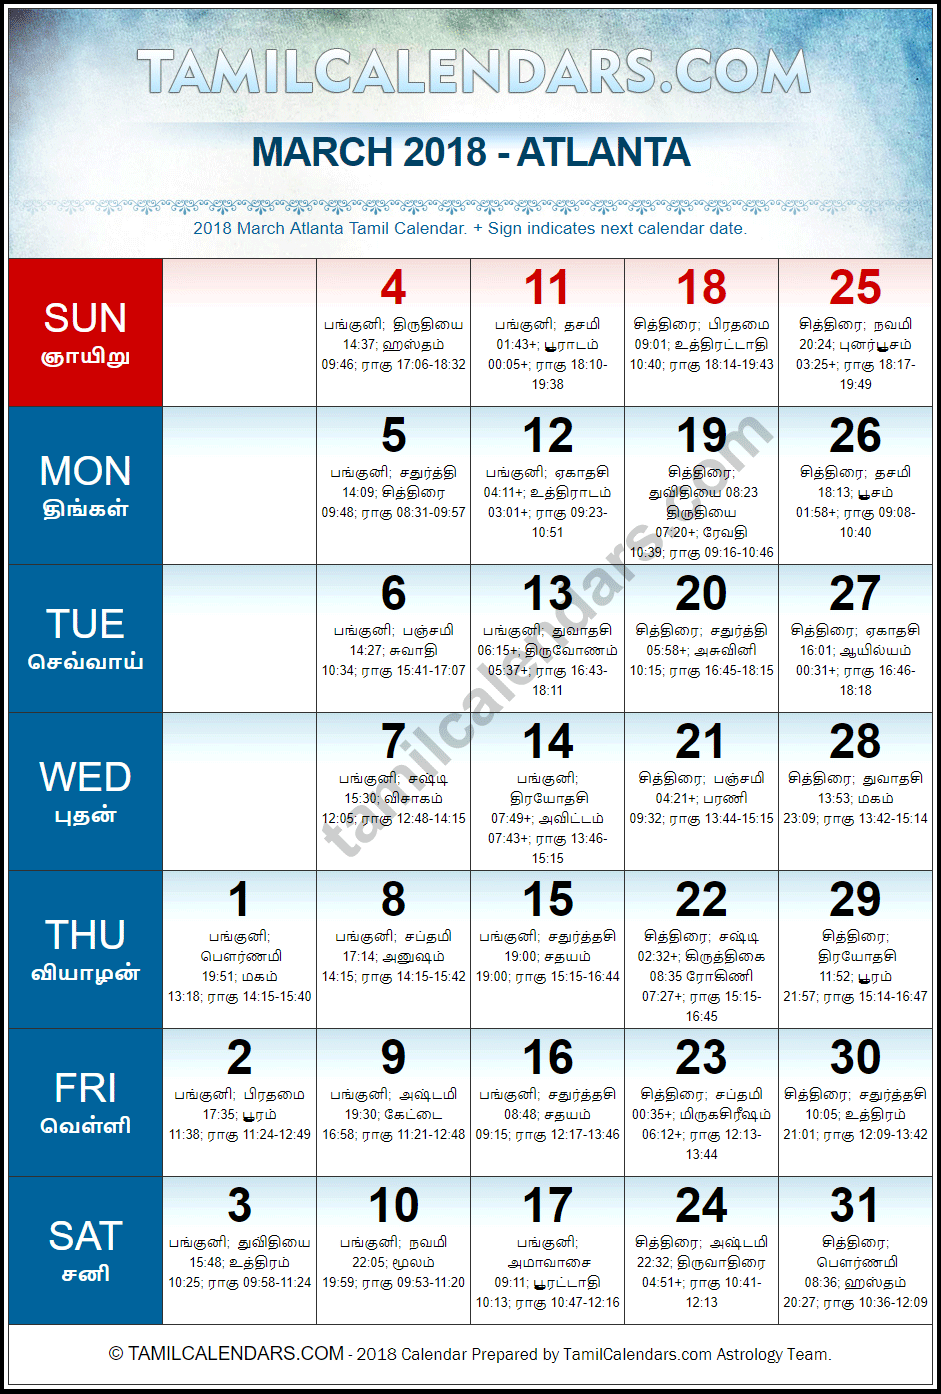 March 2018 Tamil Calendar for Atlanta, USA